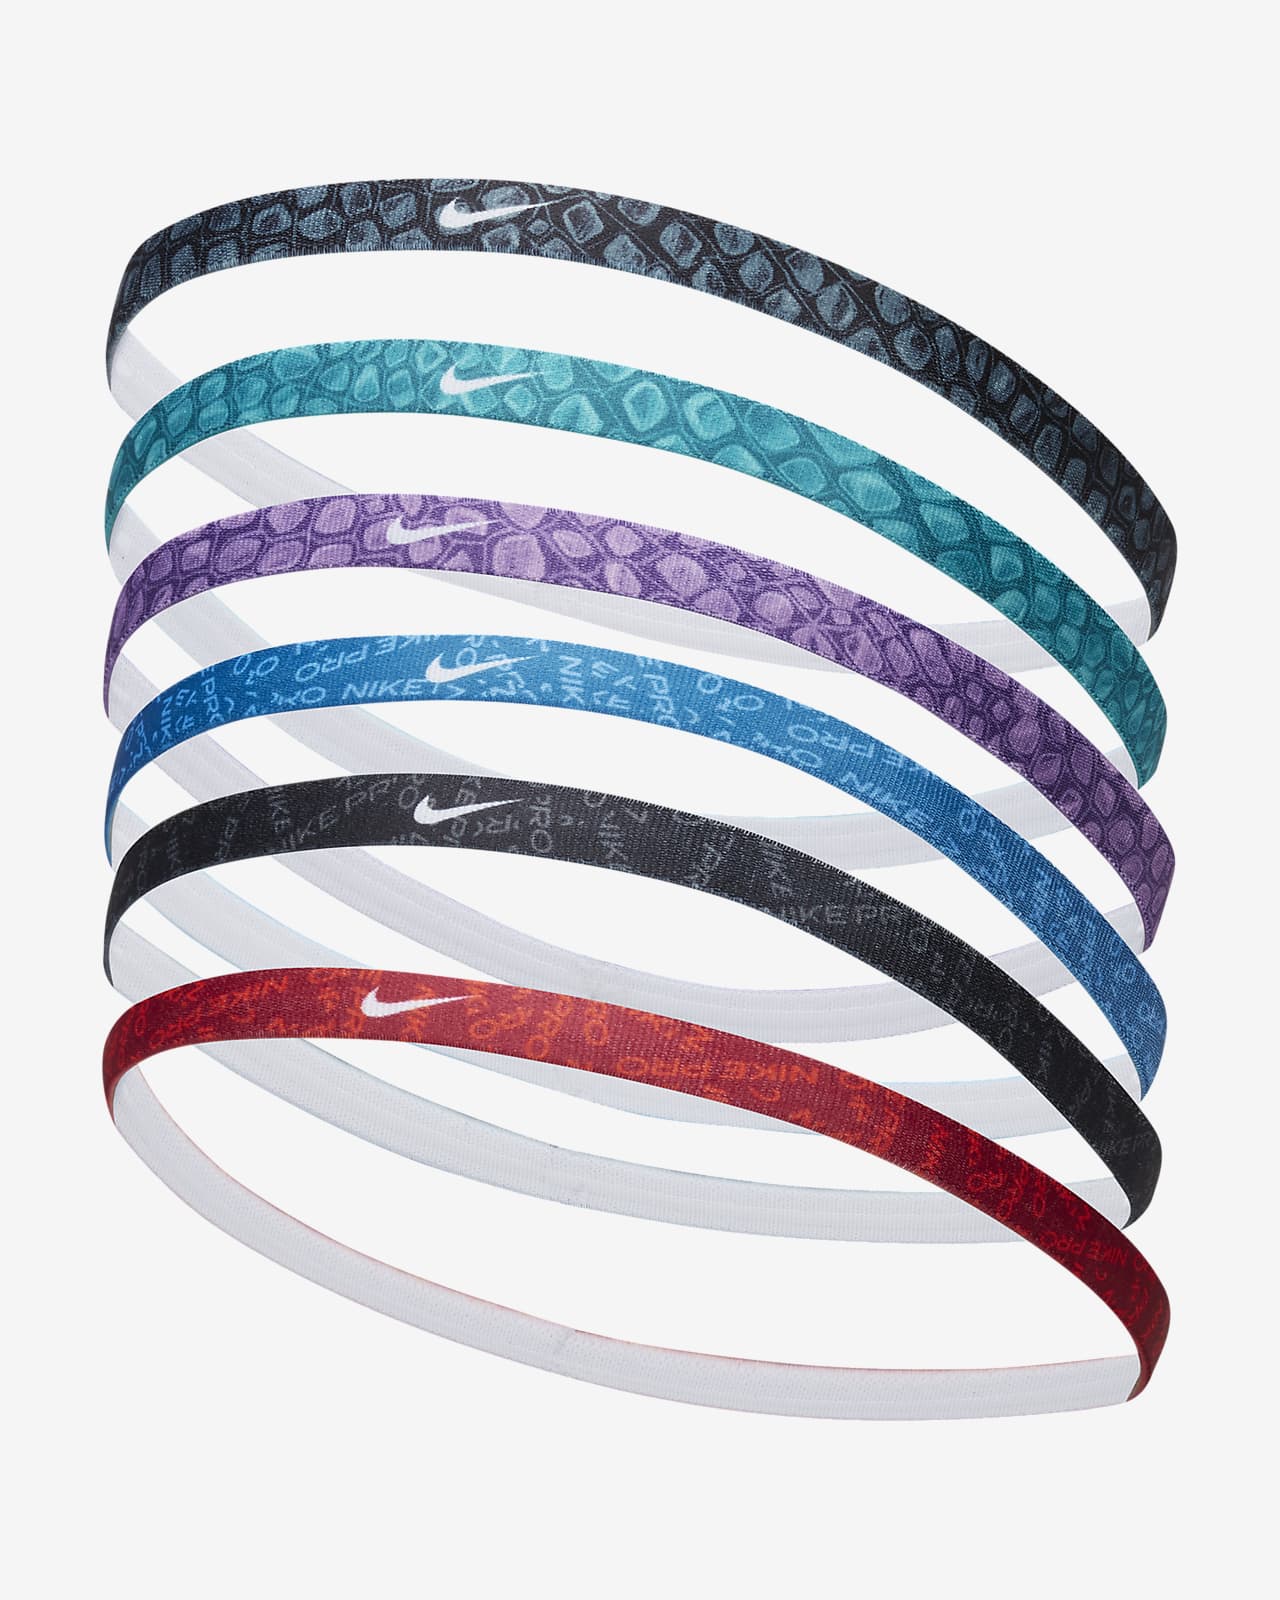 Nike Headbands (6 Pack)